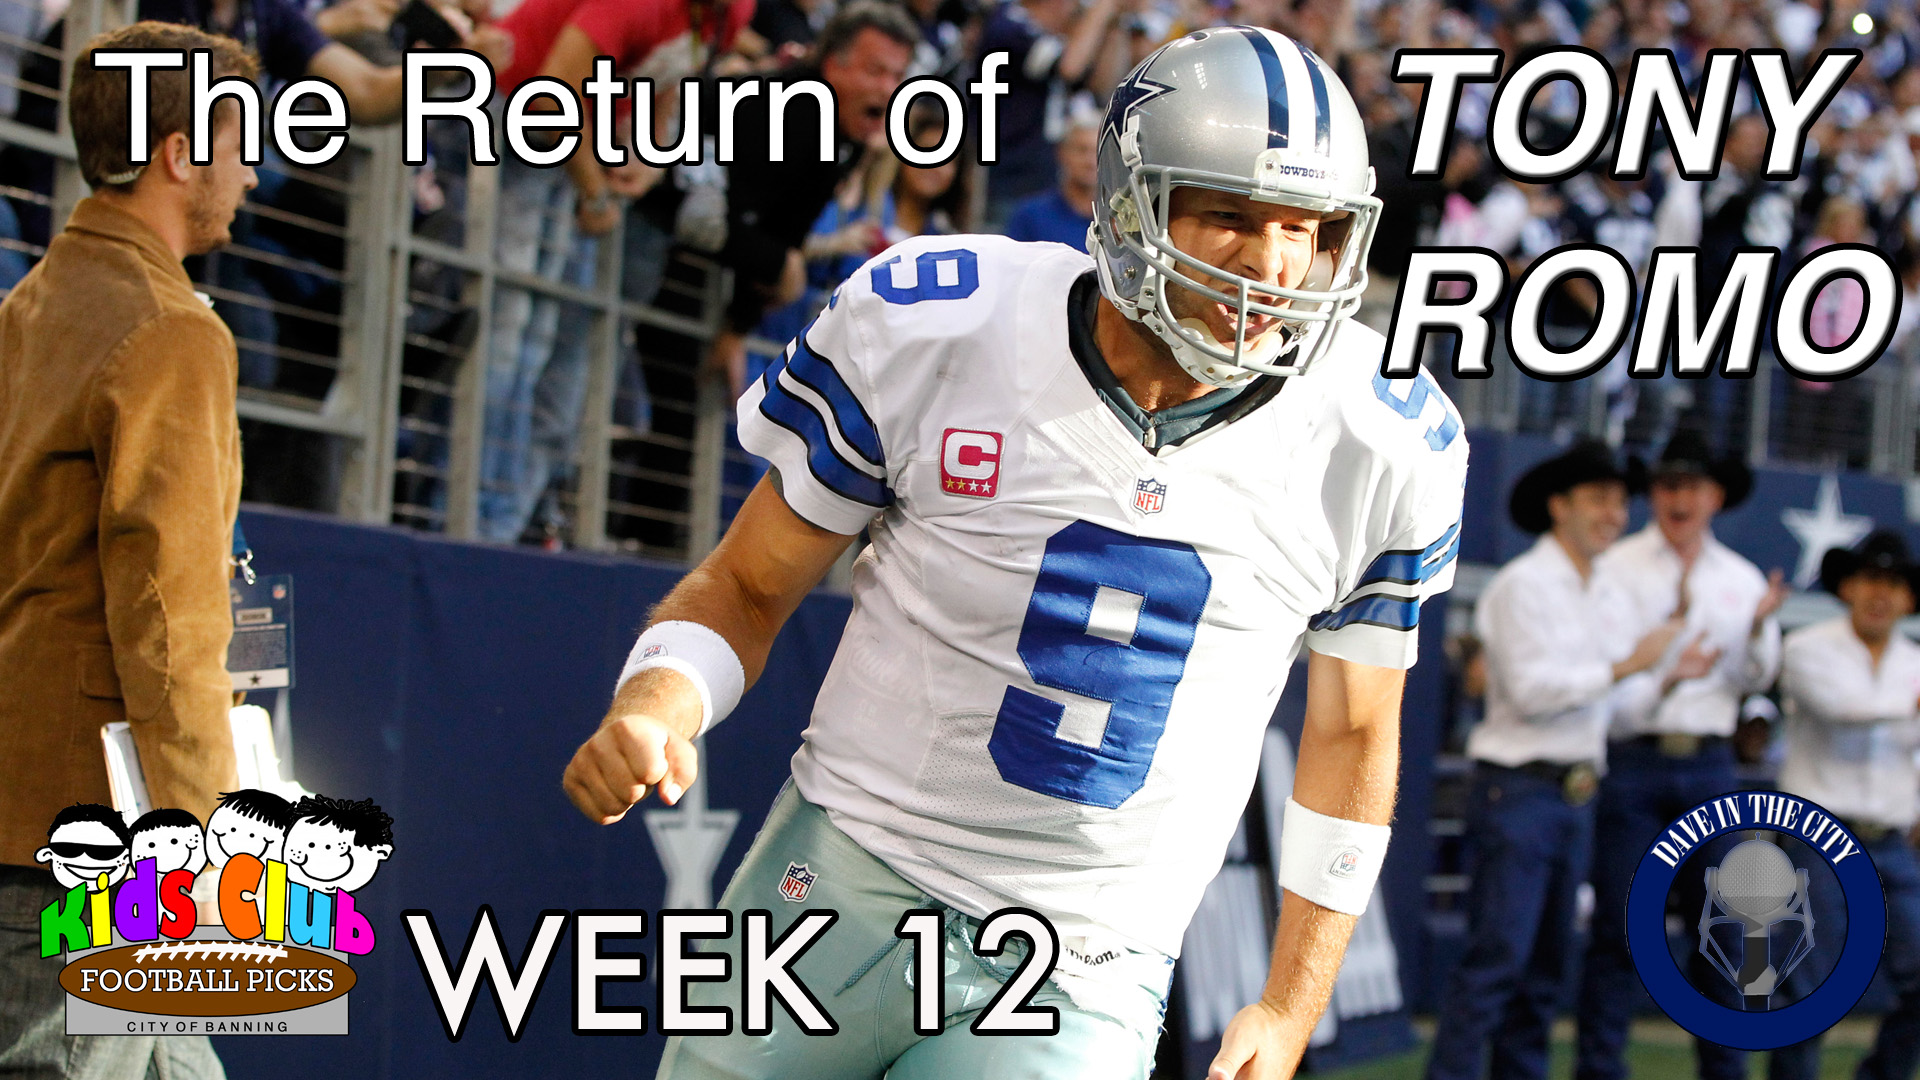 Podcast: Tony Romo Returns, Kids Club Picks, NFL, Random Q's (11-18-15)